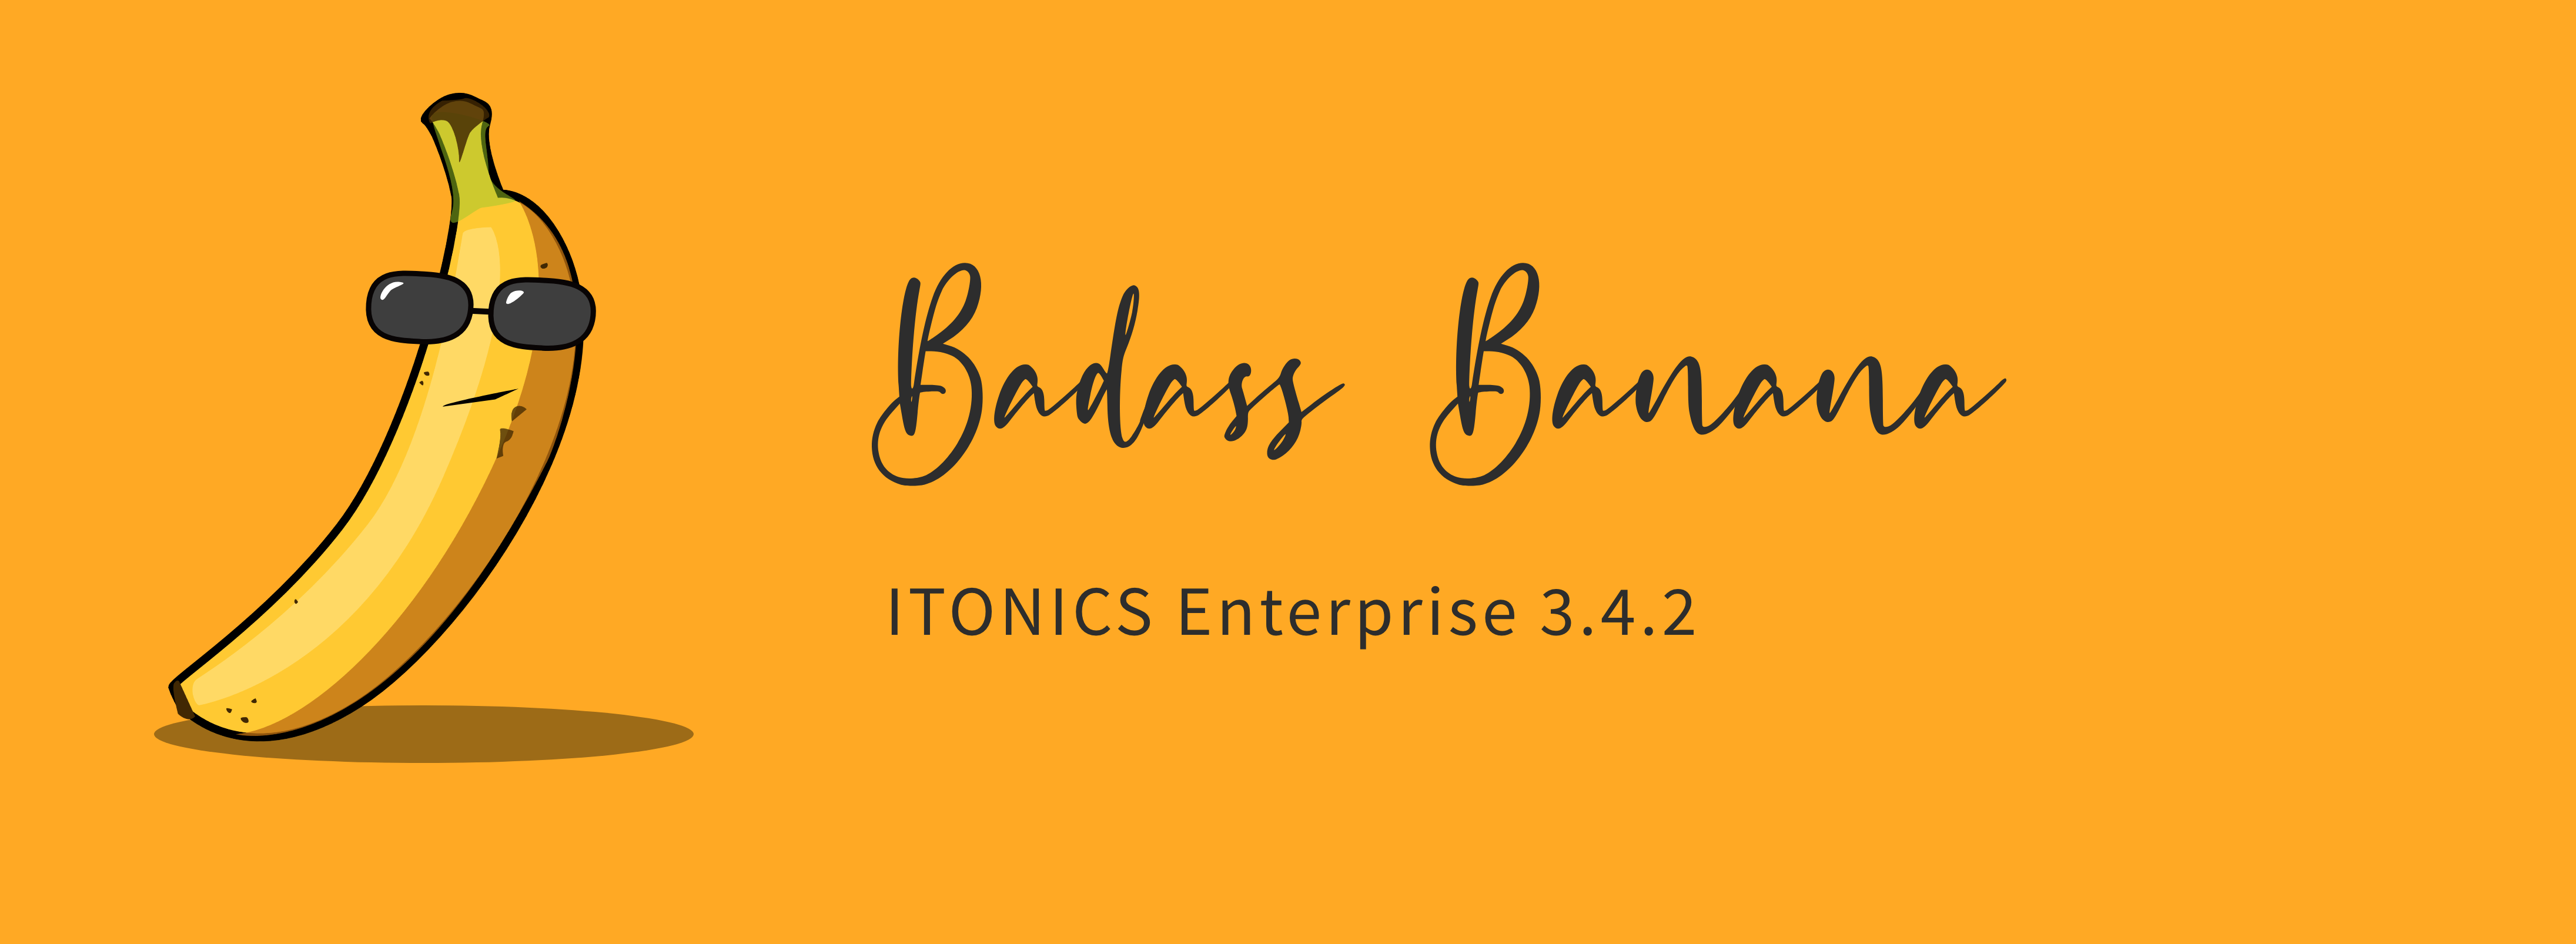 ITONICS_Enterprise_3.4.2.png